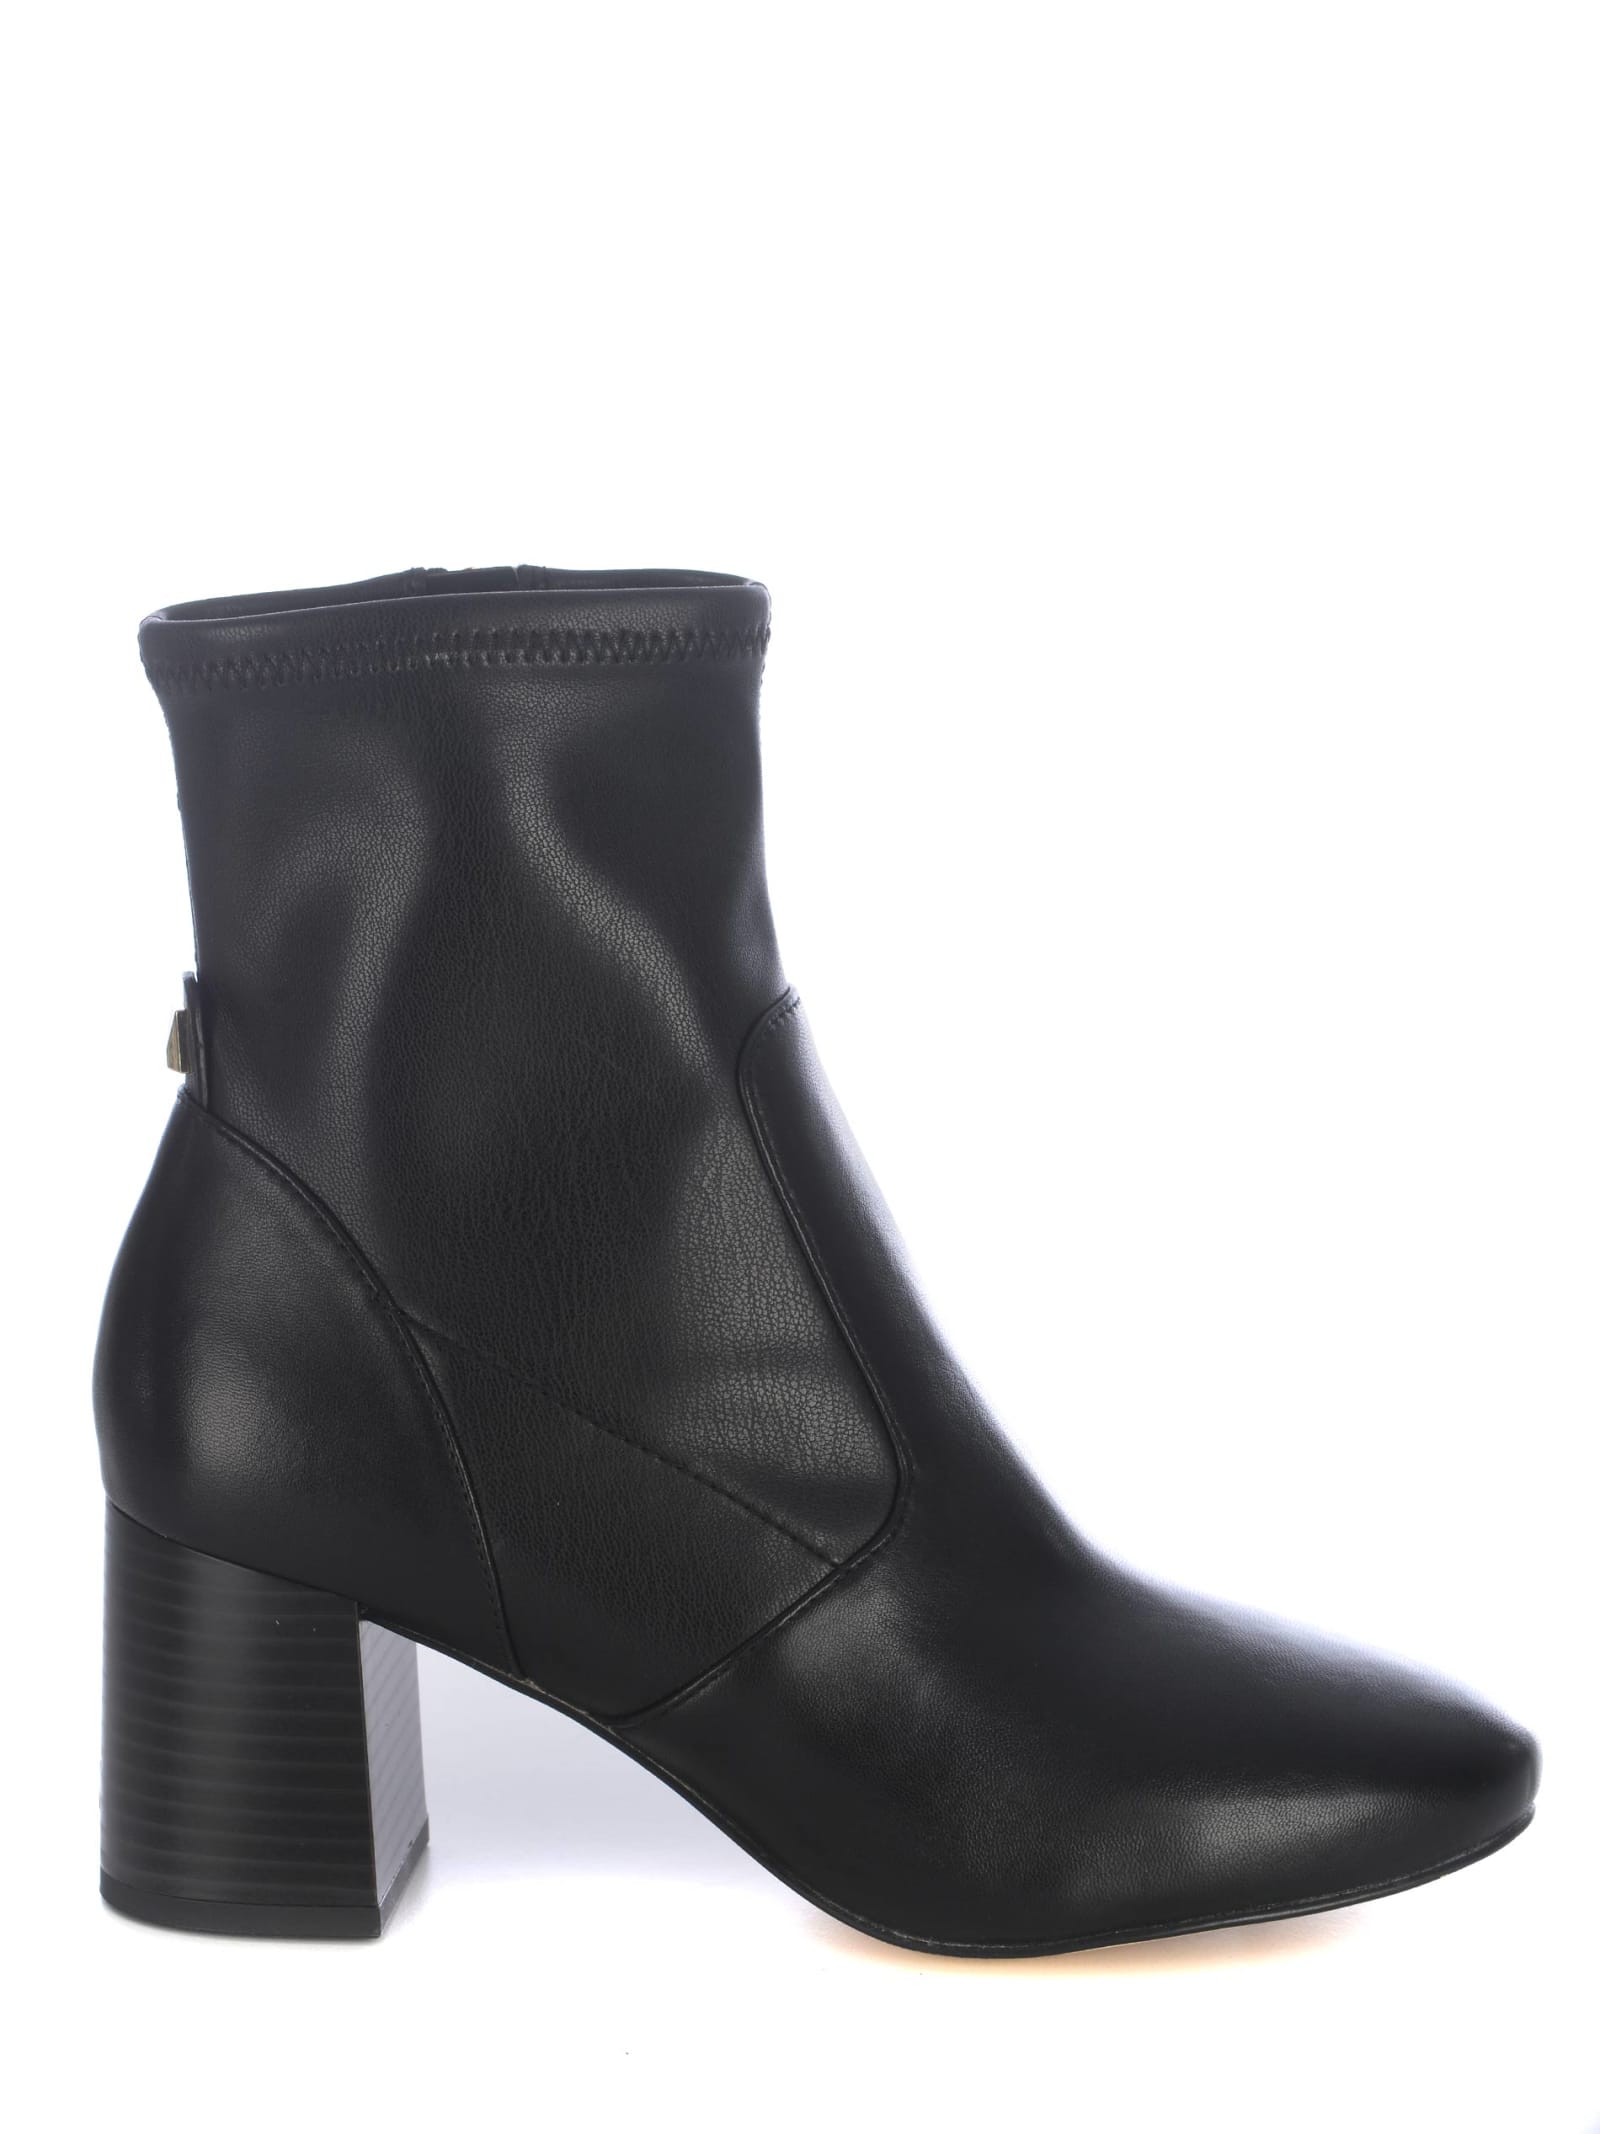 MICHAEL KORS Boots for Women | ModeSens